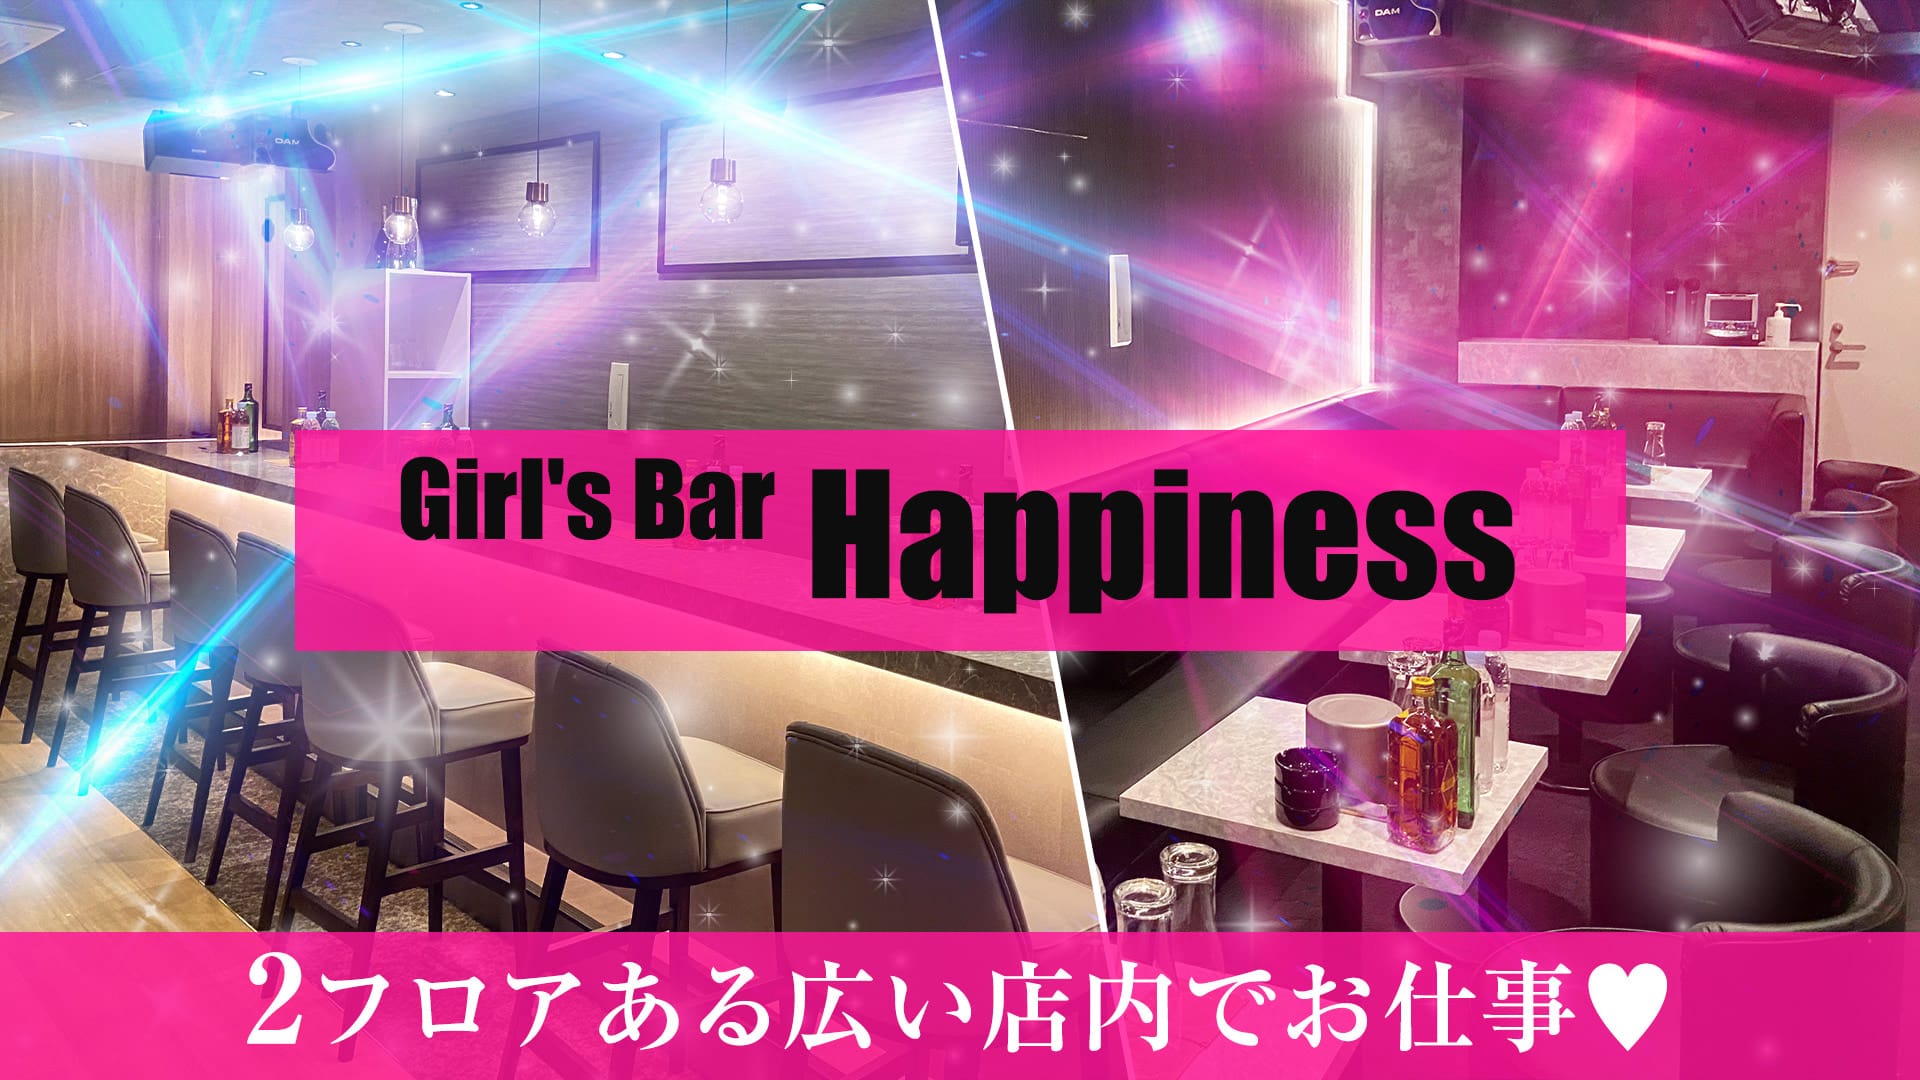 Girls Bar Happiness(ハピネス)【公式求人・体入情報】 船橋ガールズバー TOP画像